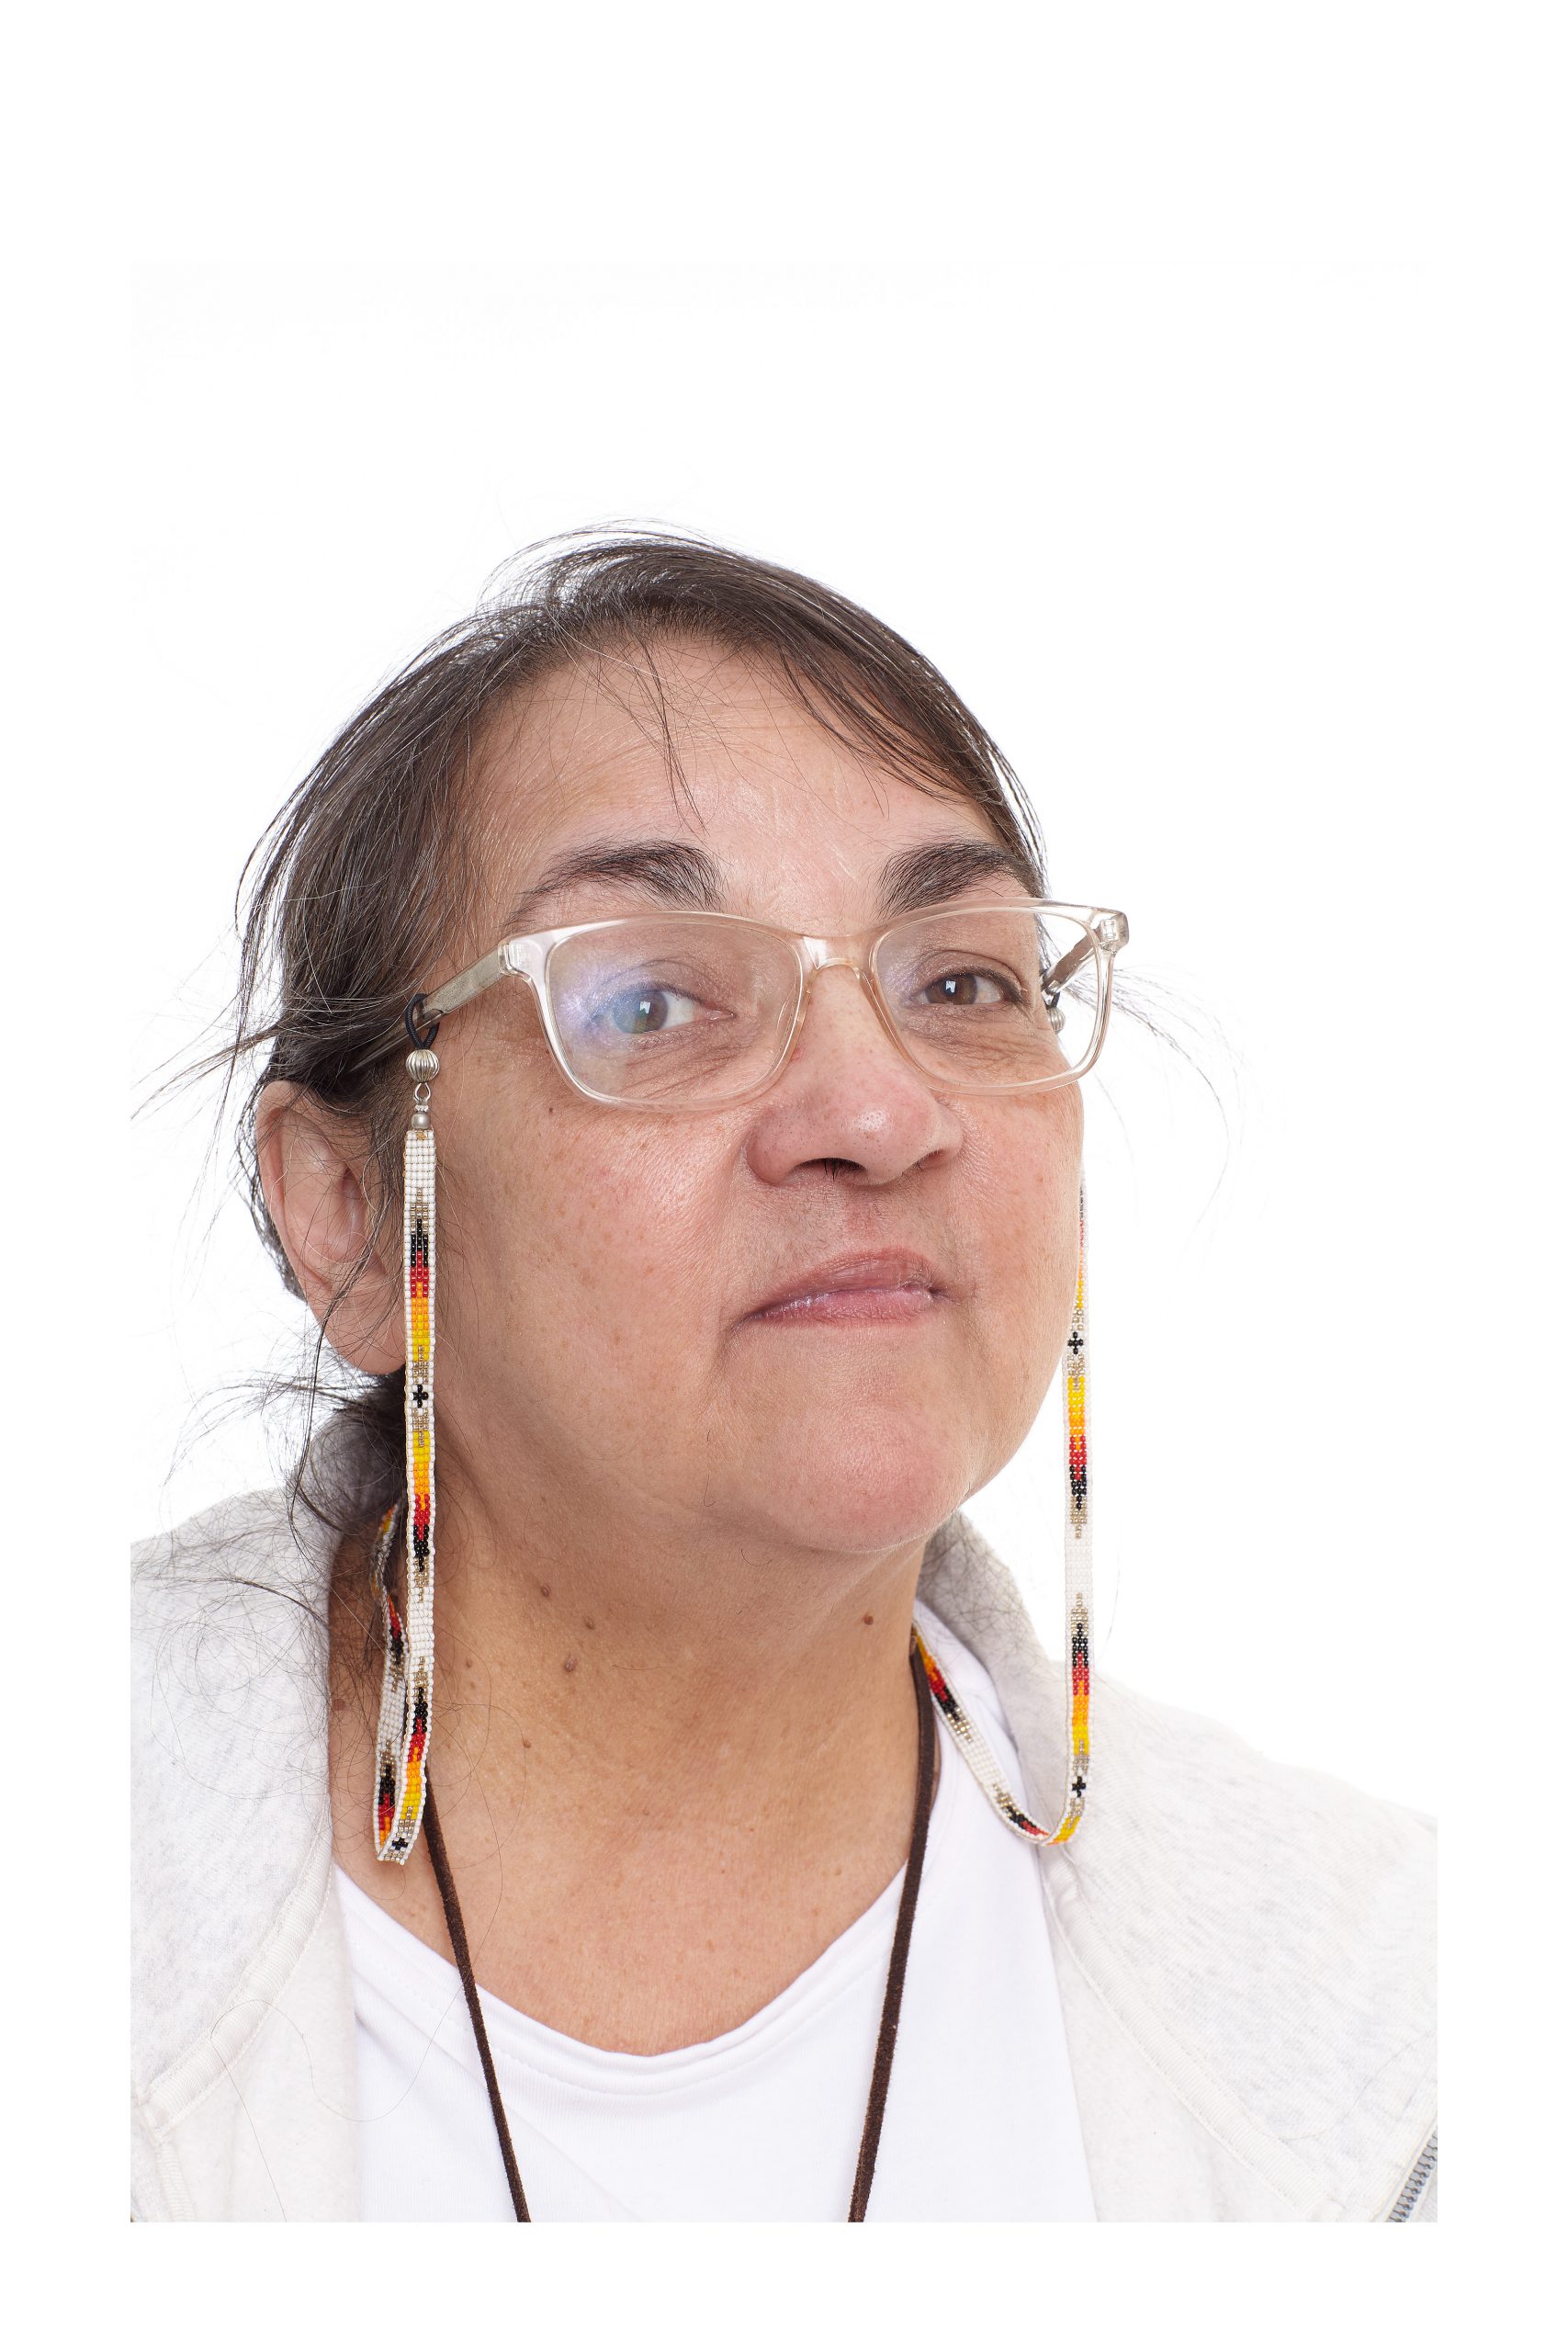     Dan Bergeron, Chief Patricia Tangie (Michipicoten First Nation), 2019

